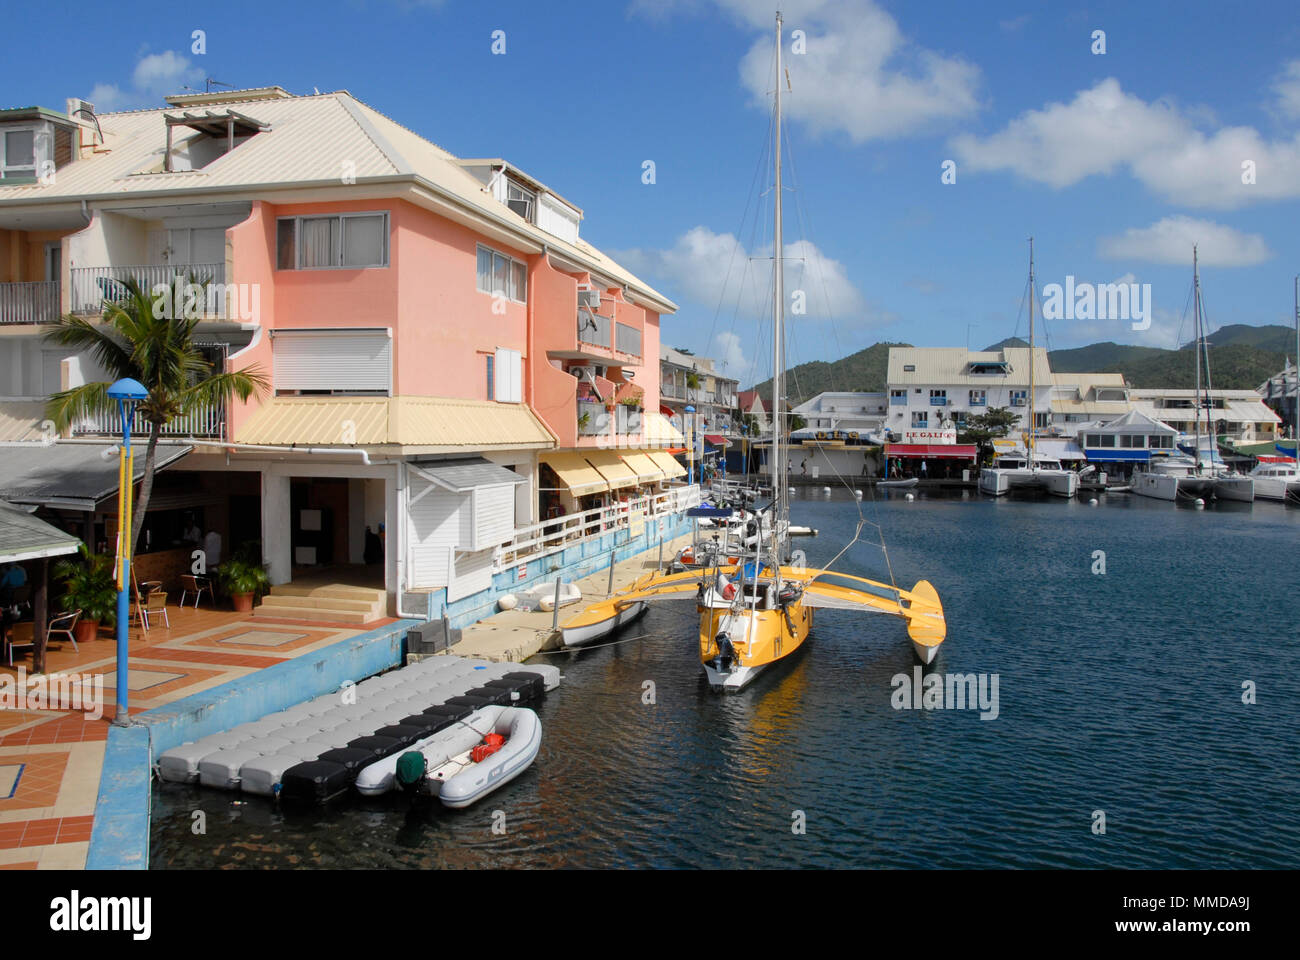 Trimaran berthed at Port La Royale marina, St Martin, Caribbean Stock Photo